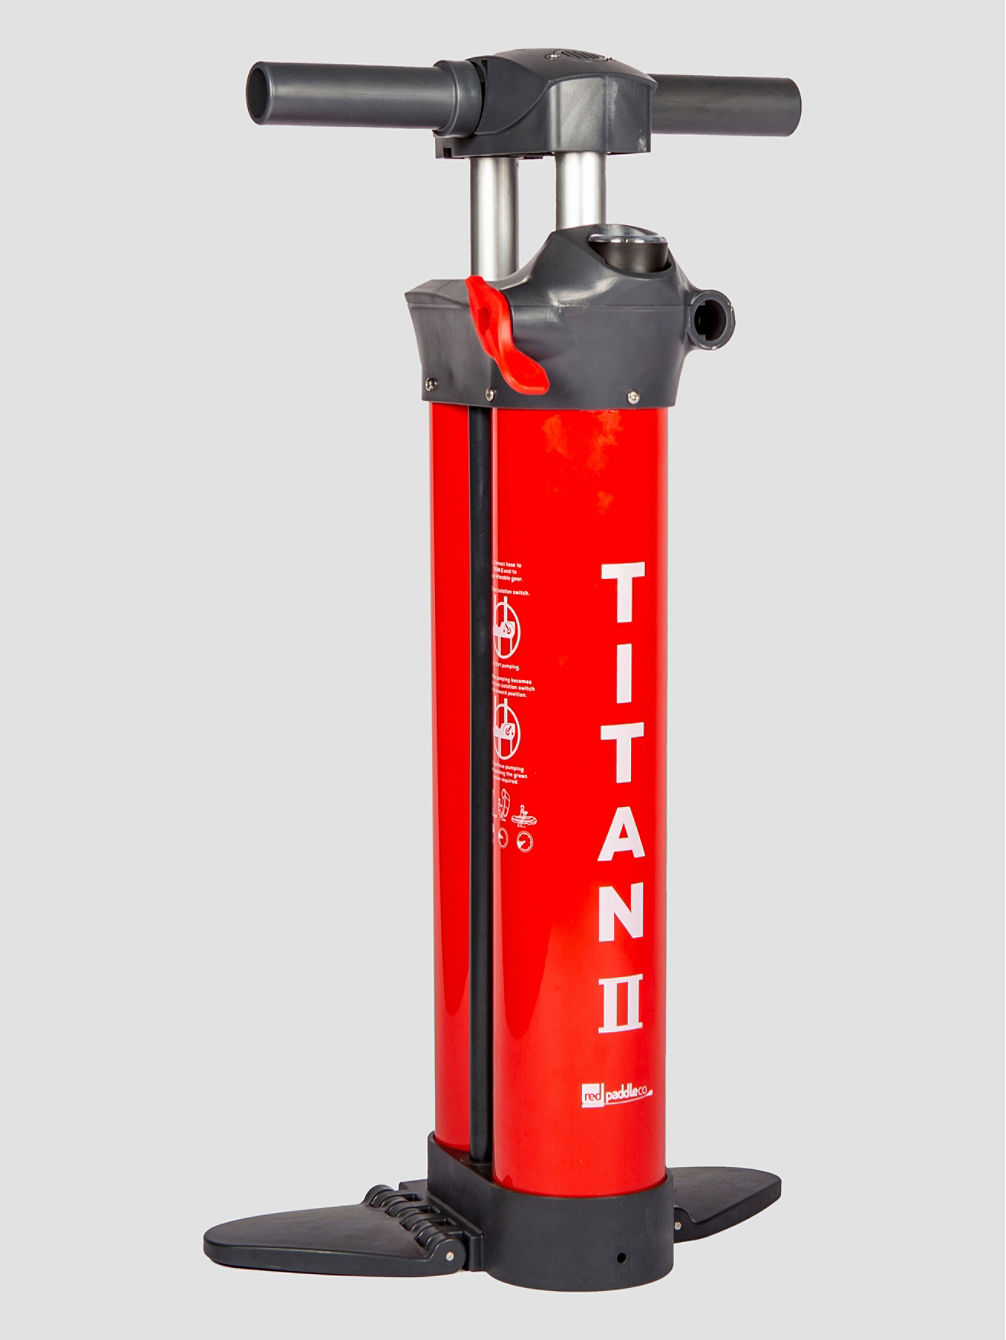 Titan II Pump in the Box SUP Accessoies